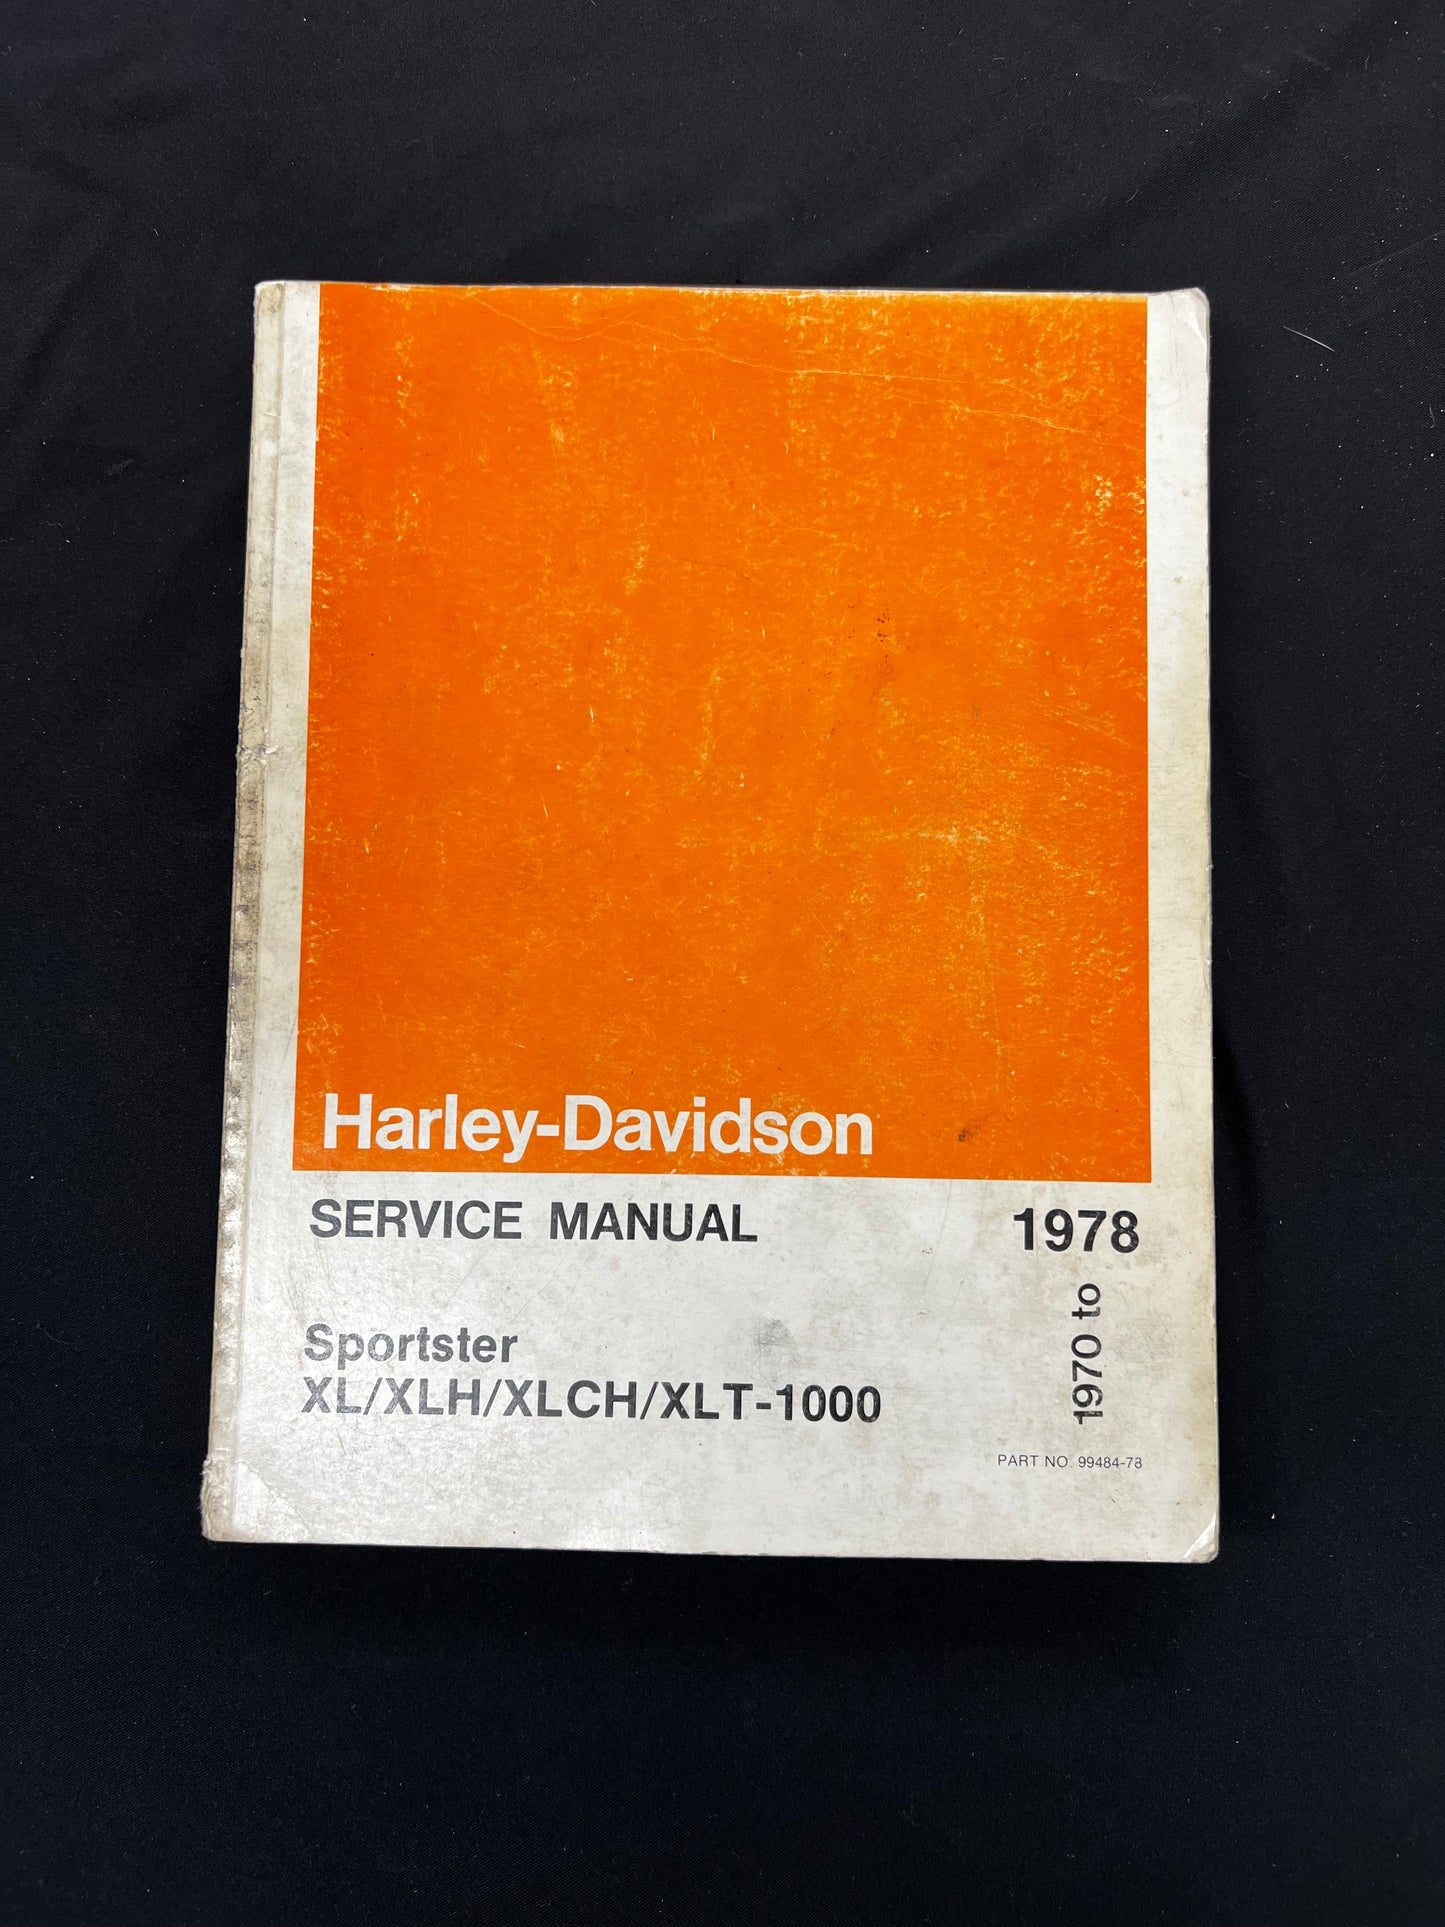 Harley Davidson Sportster Service Manual 1978